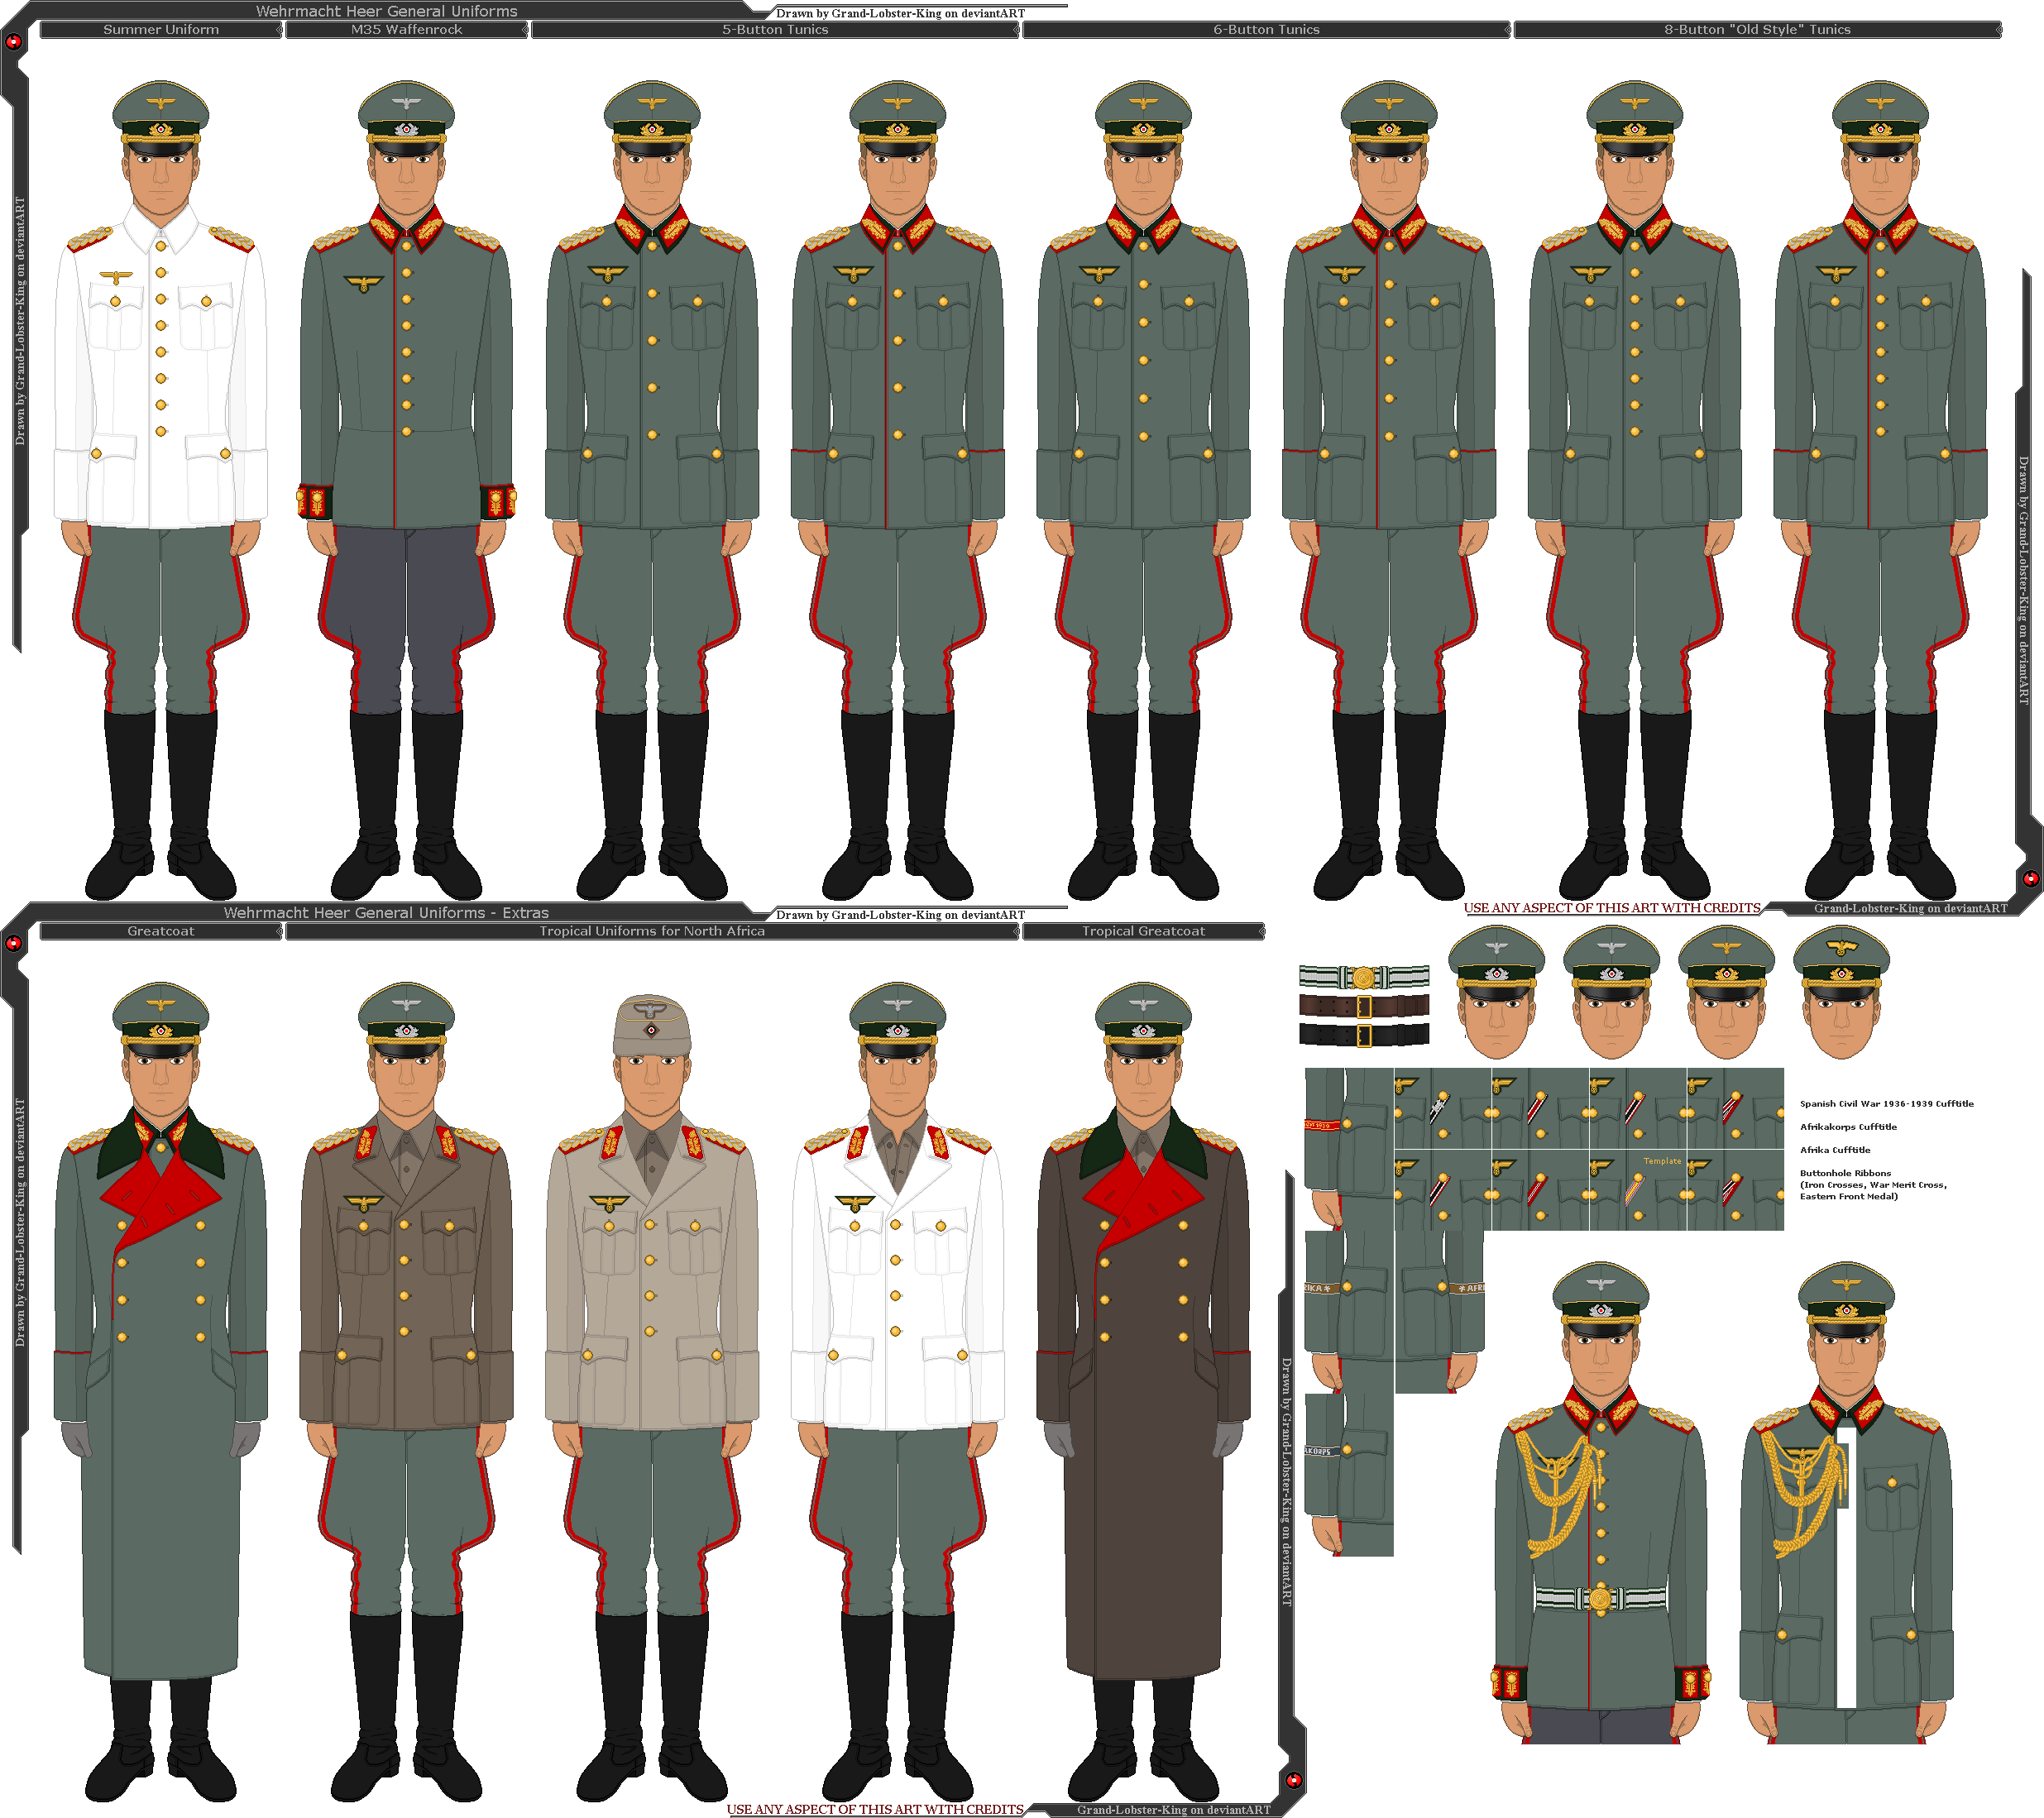 Wehrmacht Heer General Uniforms by Grand-Lobster-King on DeviantArt